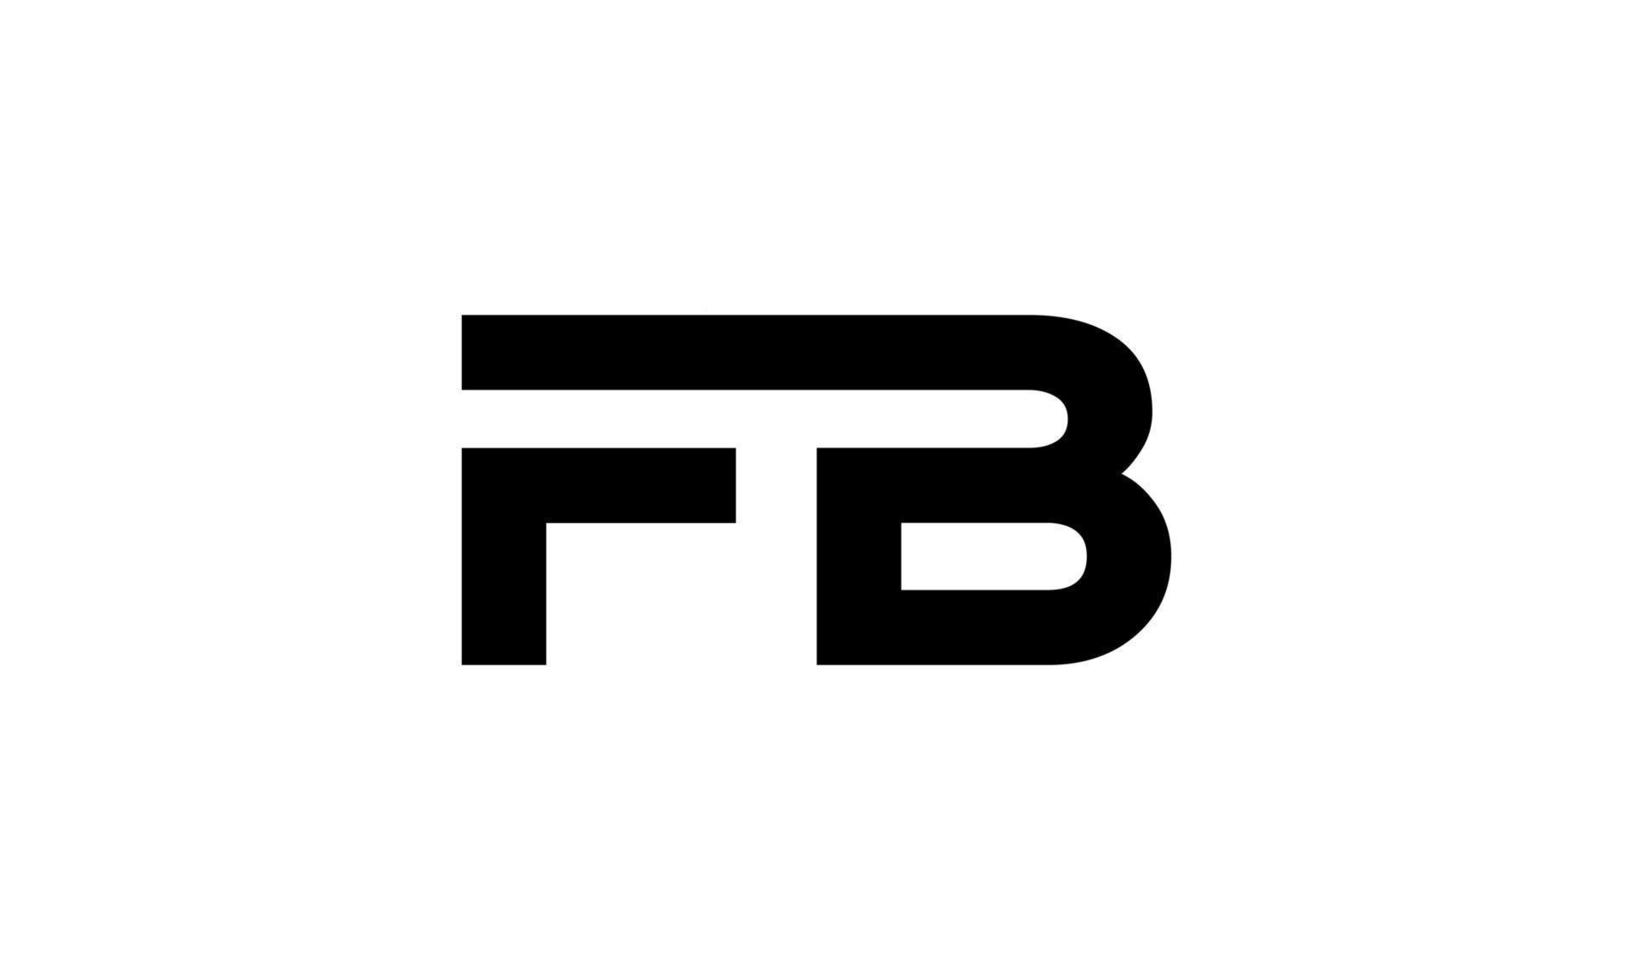 brief fb logo pro vector het dossier pro vector